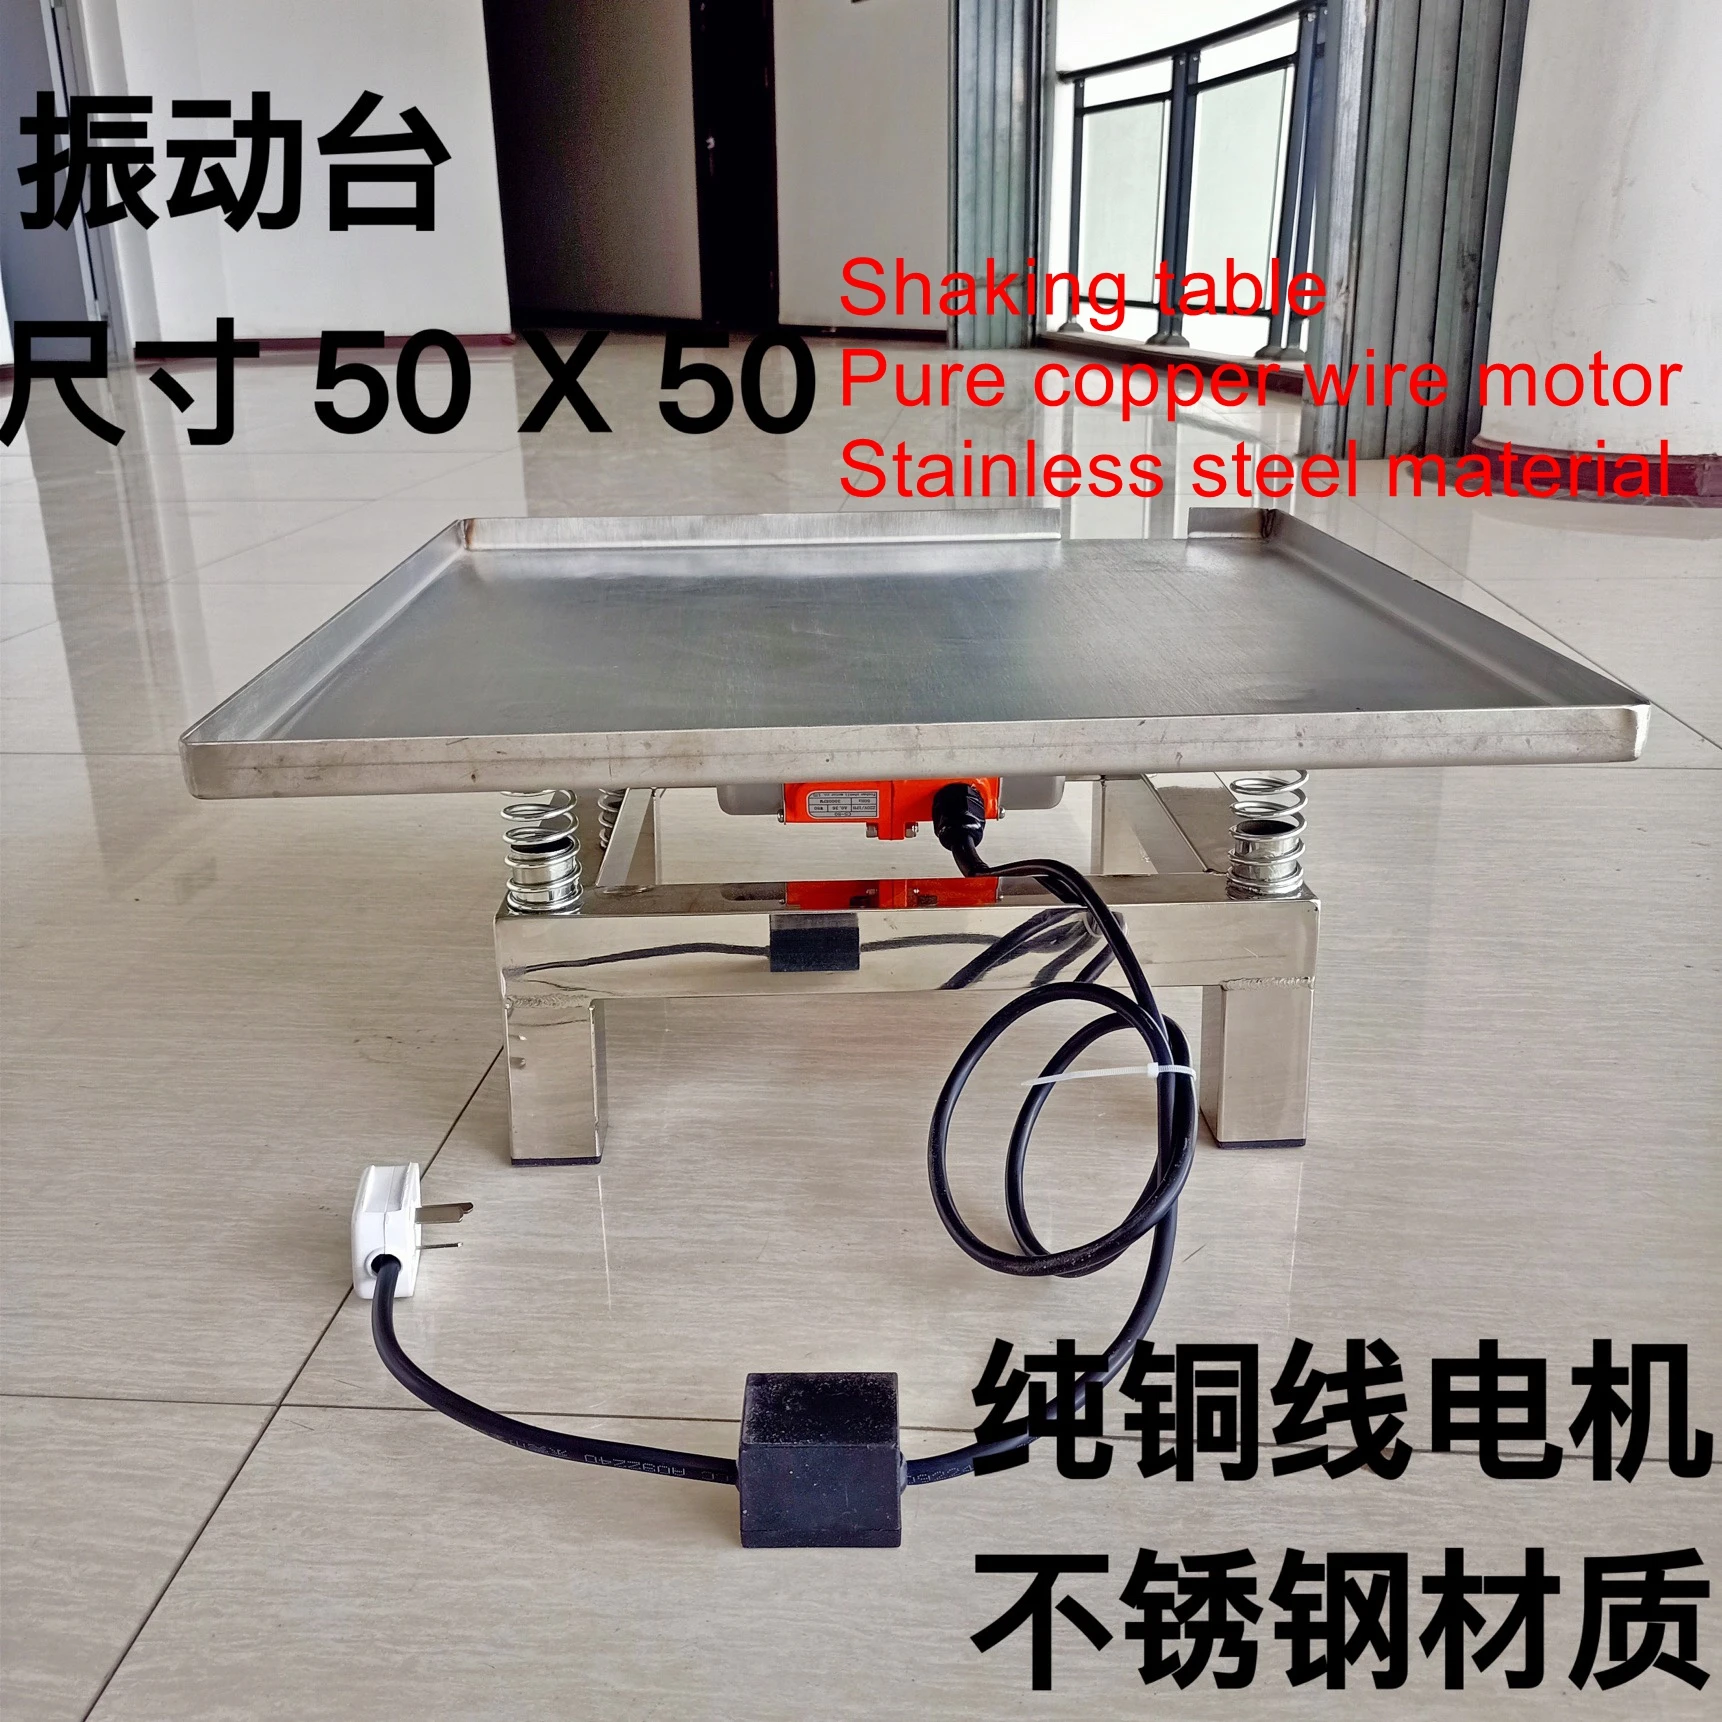 

50cm x 50cm stainless steel shaker small concrete shaker test bench test block vibration platform